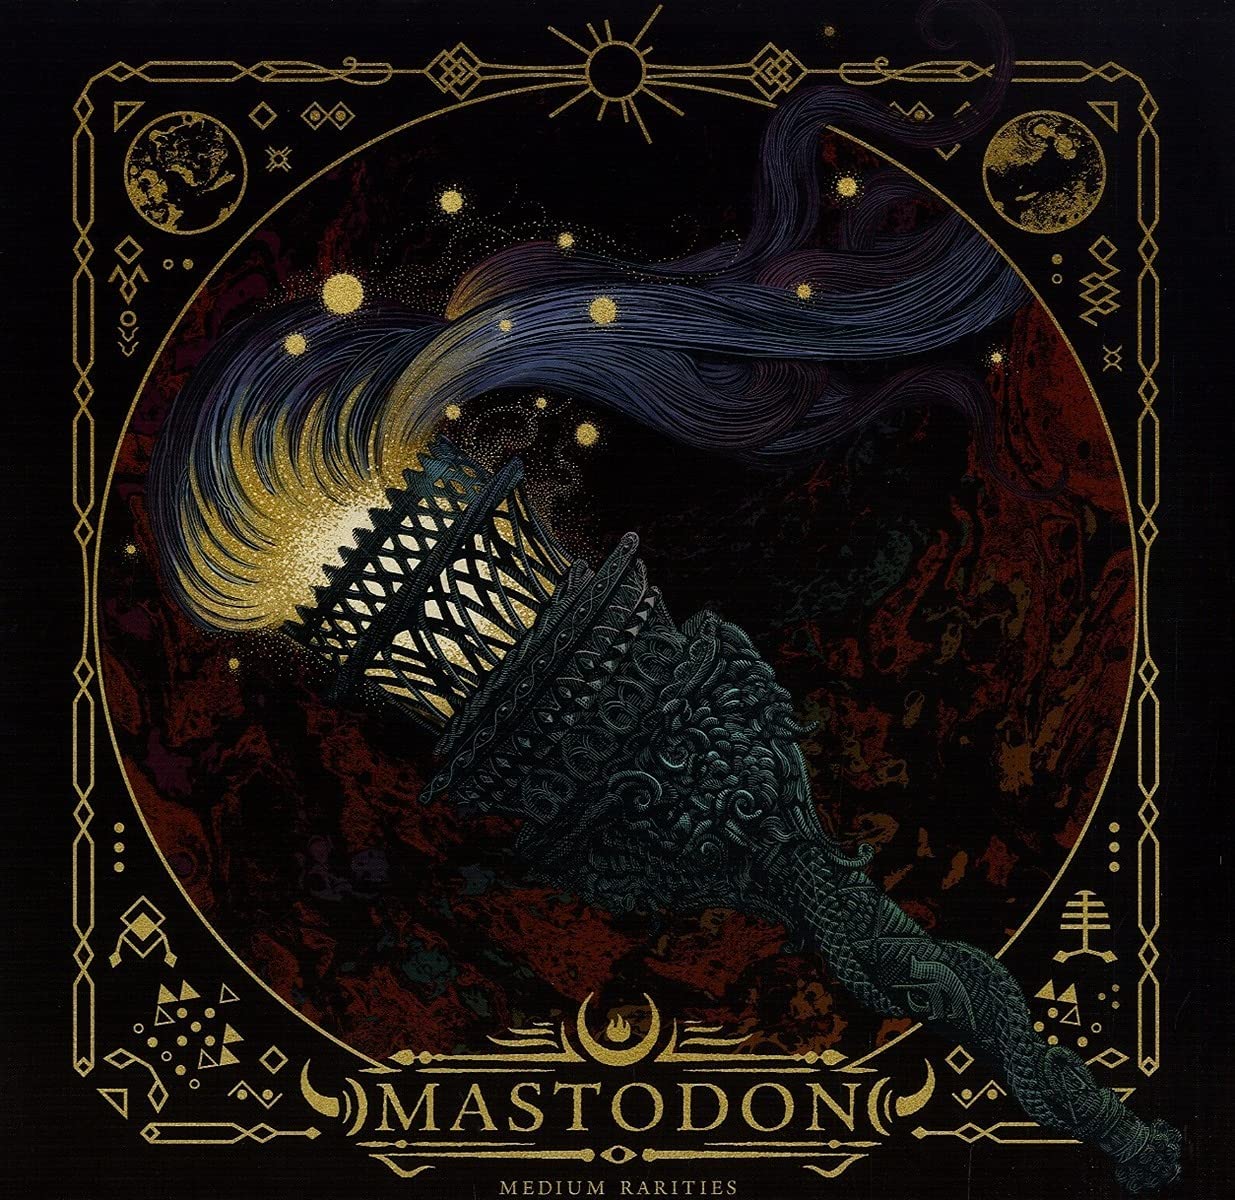 Mastodon "Medium Rarities" 2x12" Vinyl